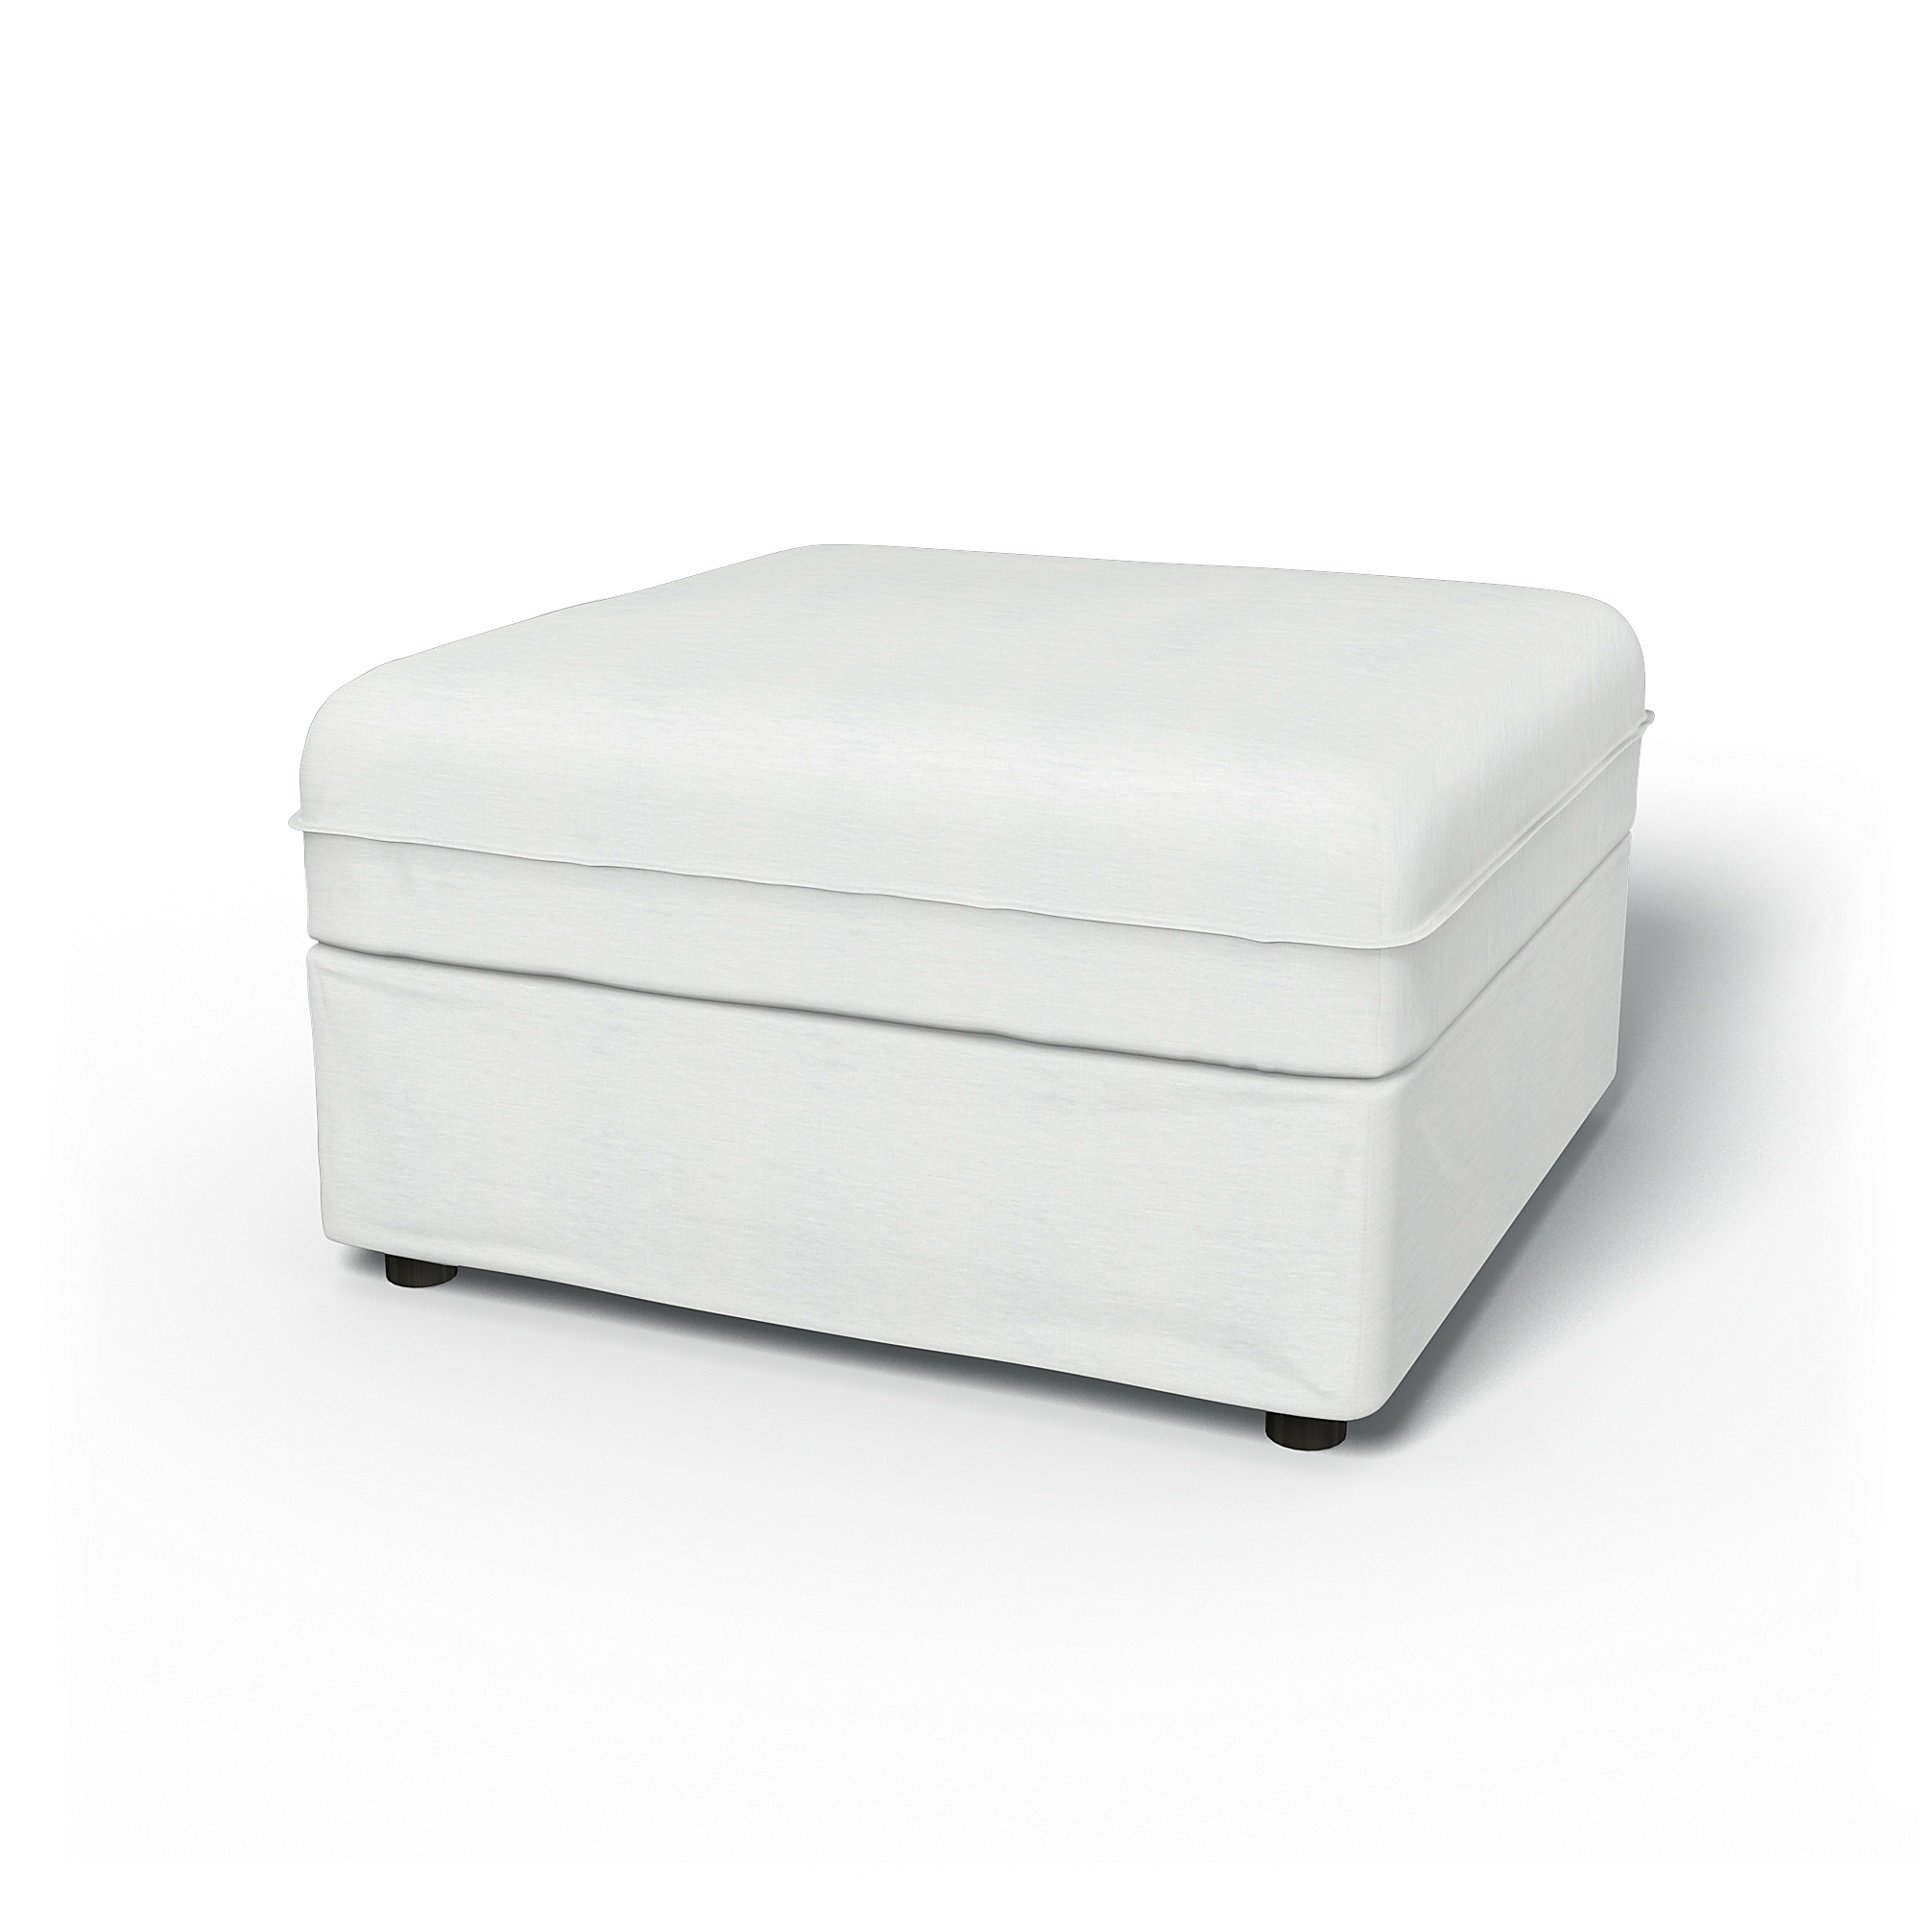 IKEA - Vallentuna Seat Module with Storage Cover 80x80cm 32x32in, White, Linen - Bemz